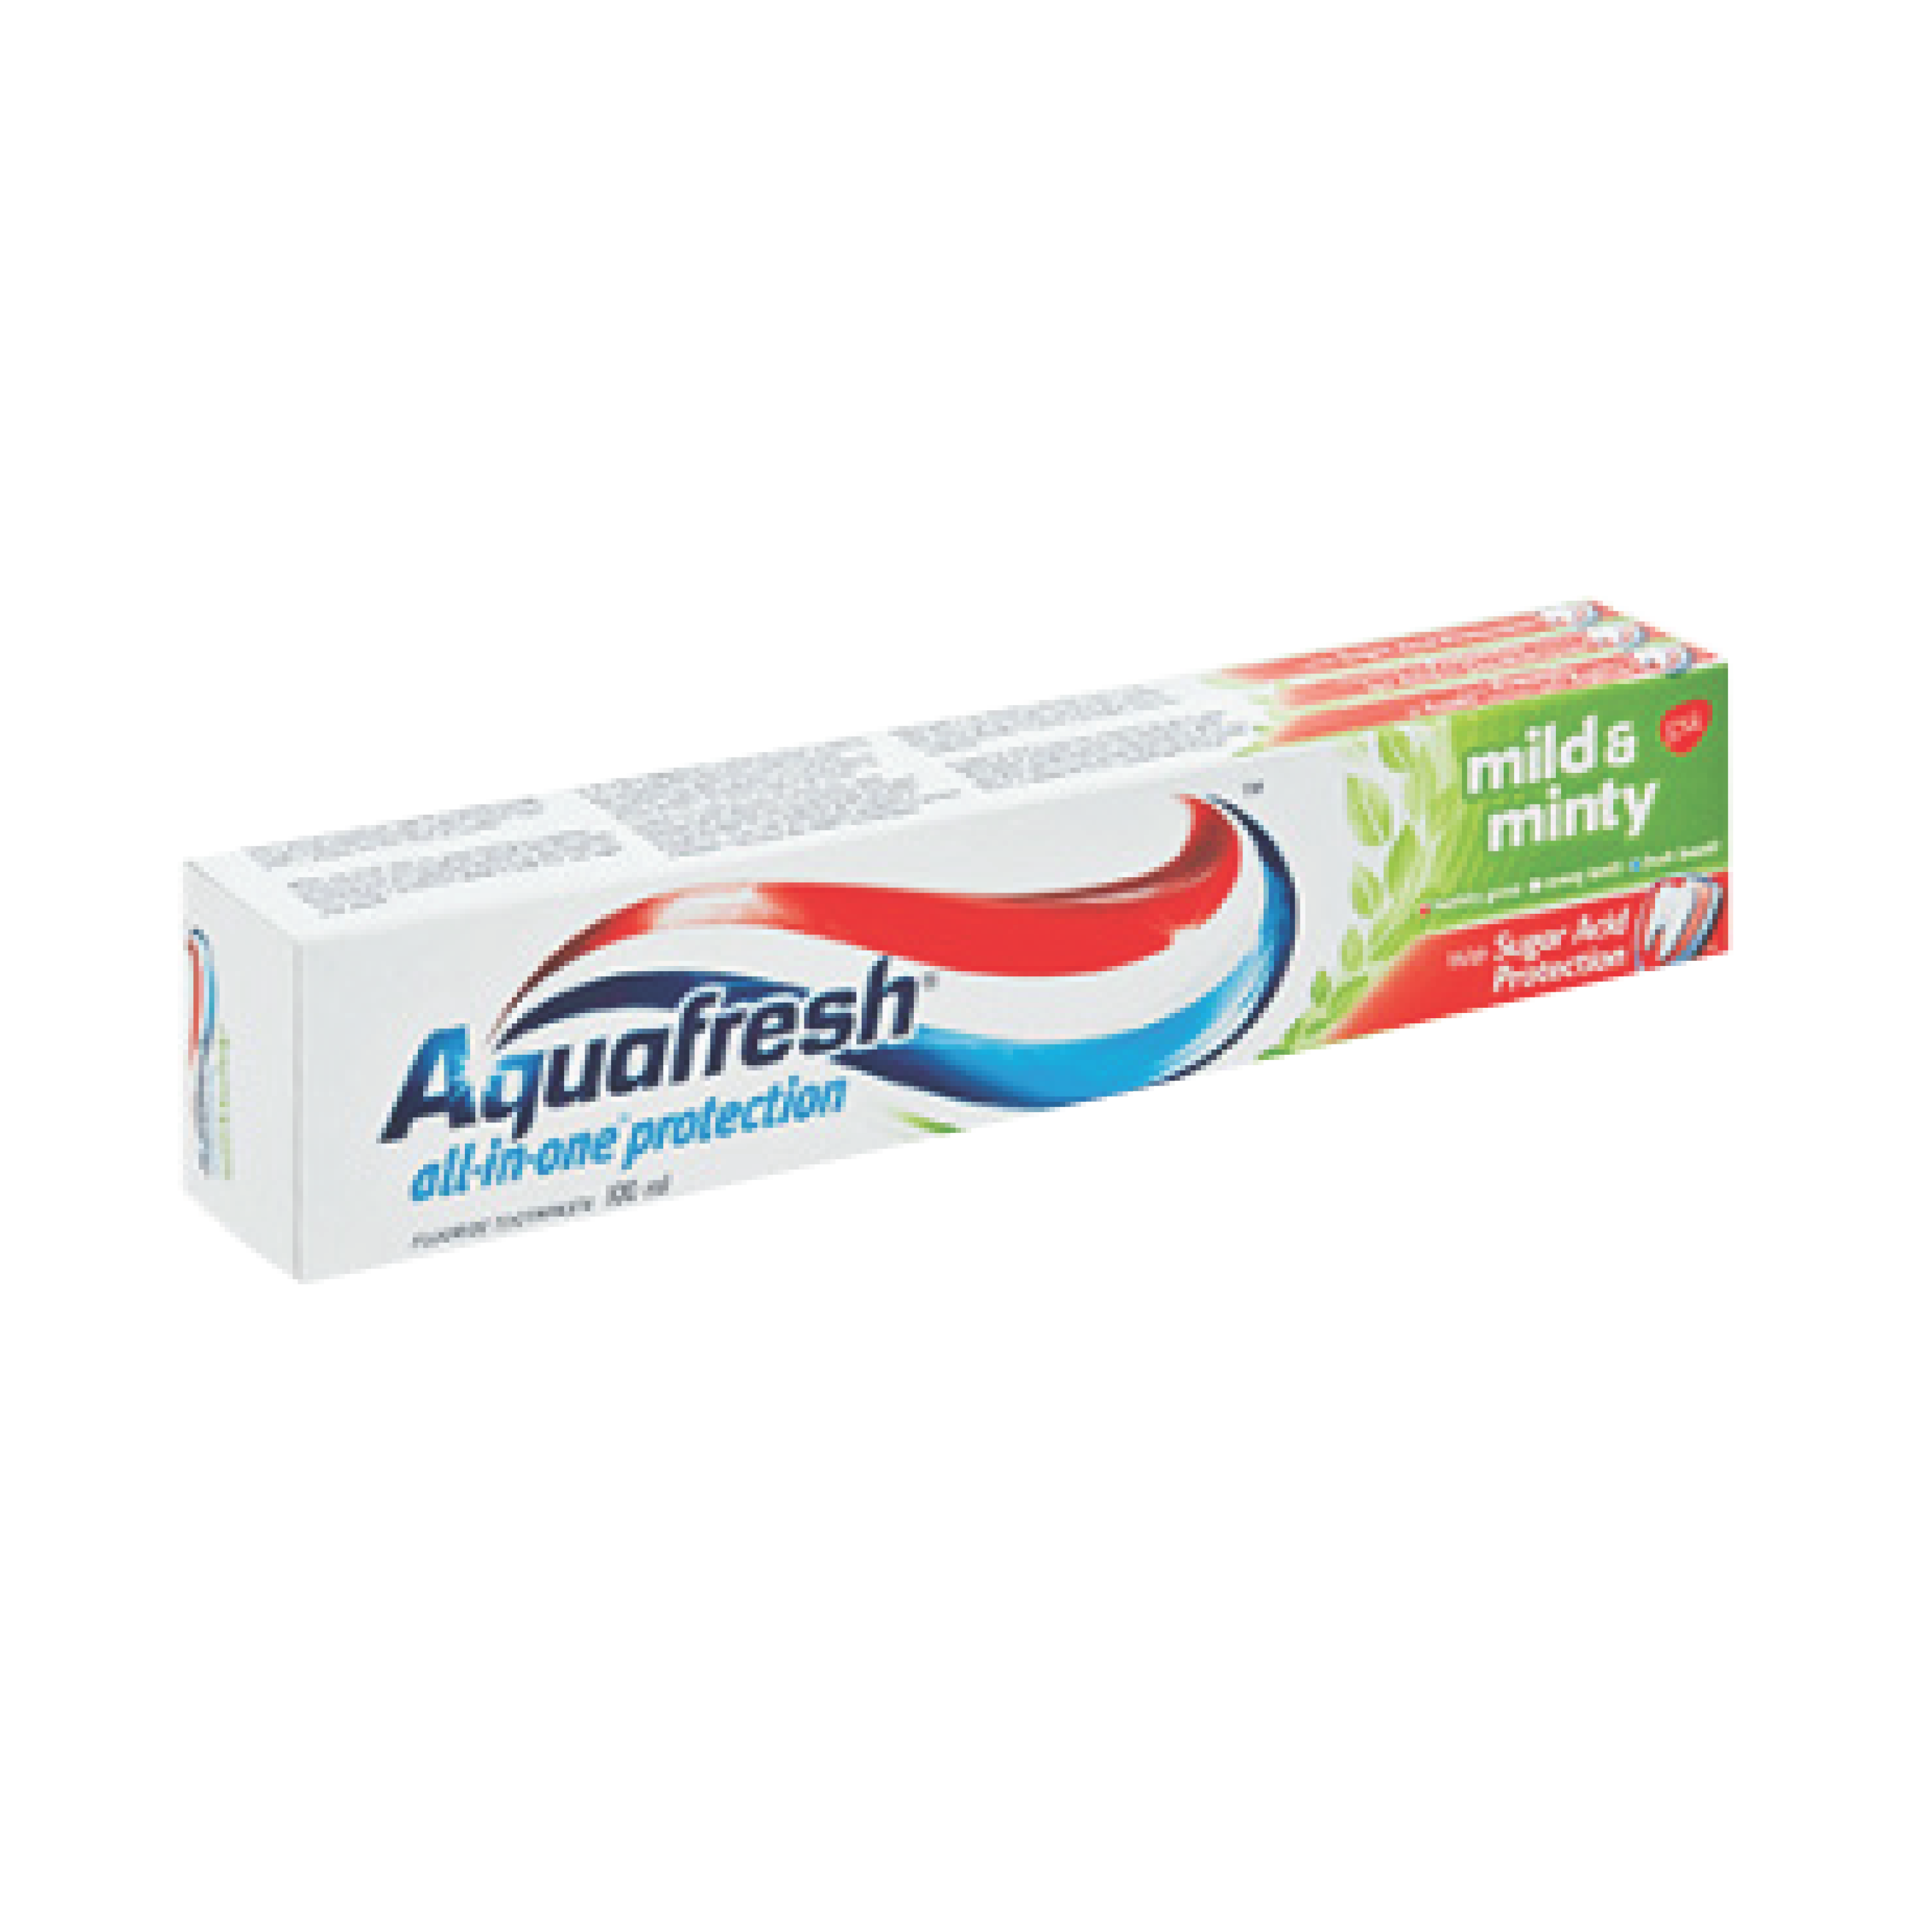 Aquafresh Toothpaste Assorted, 100ml